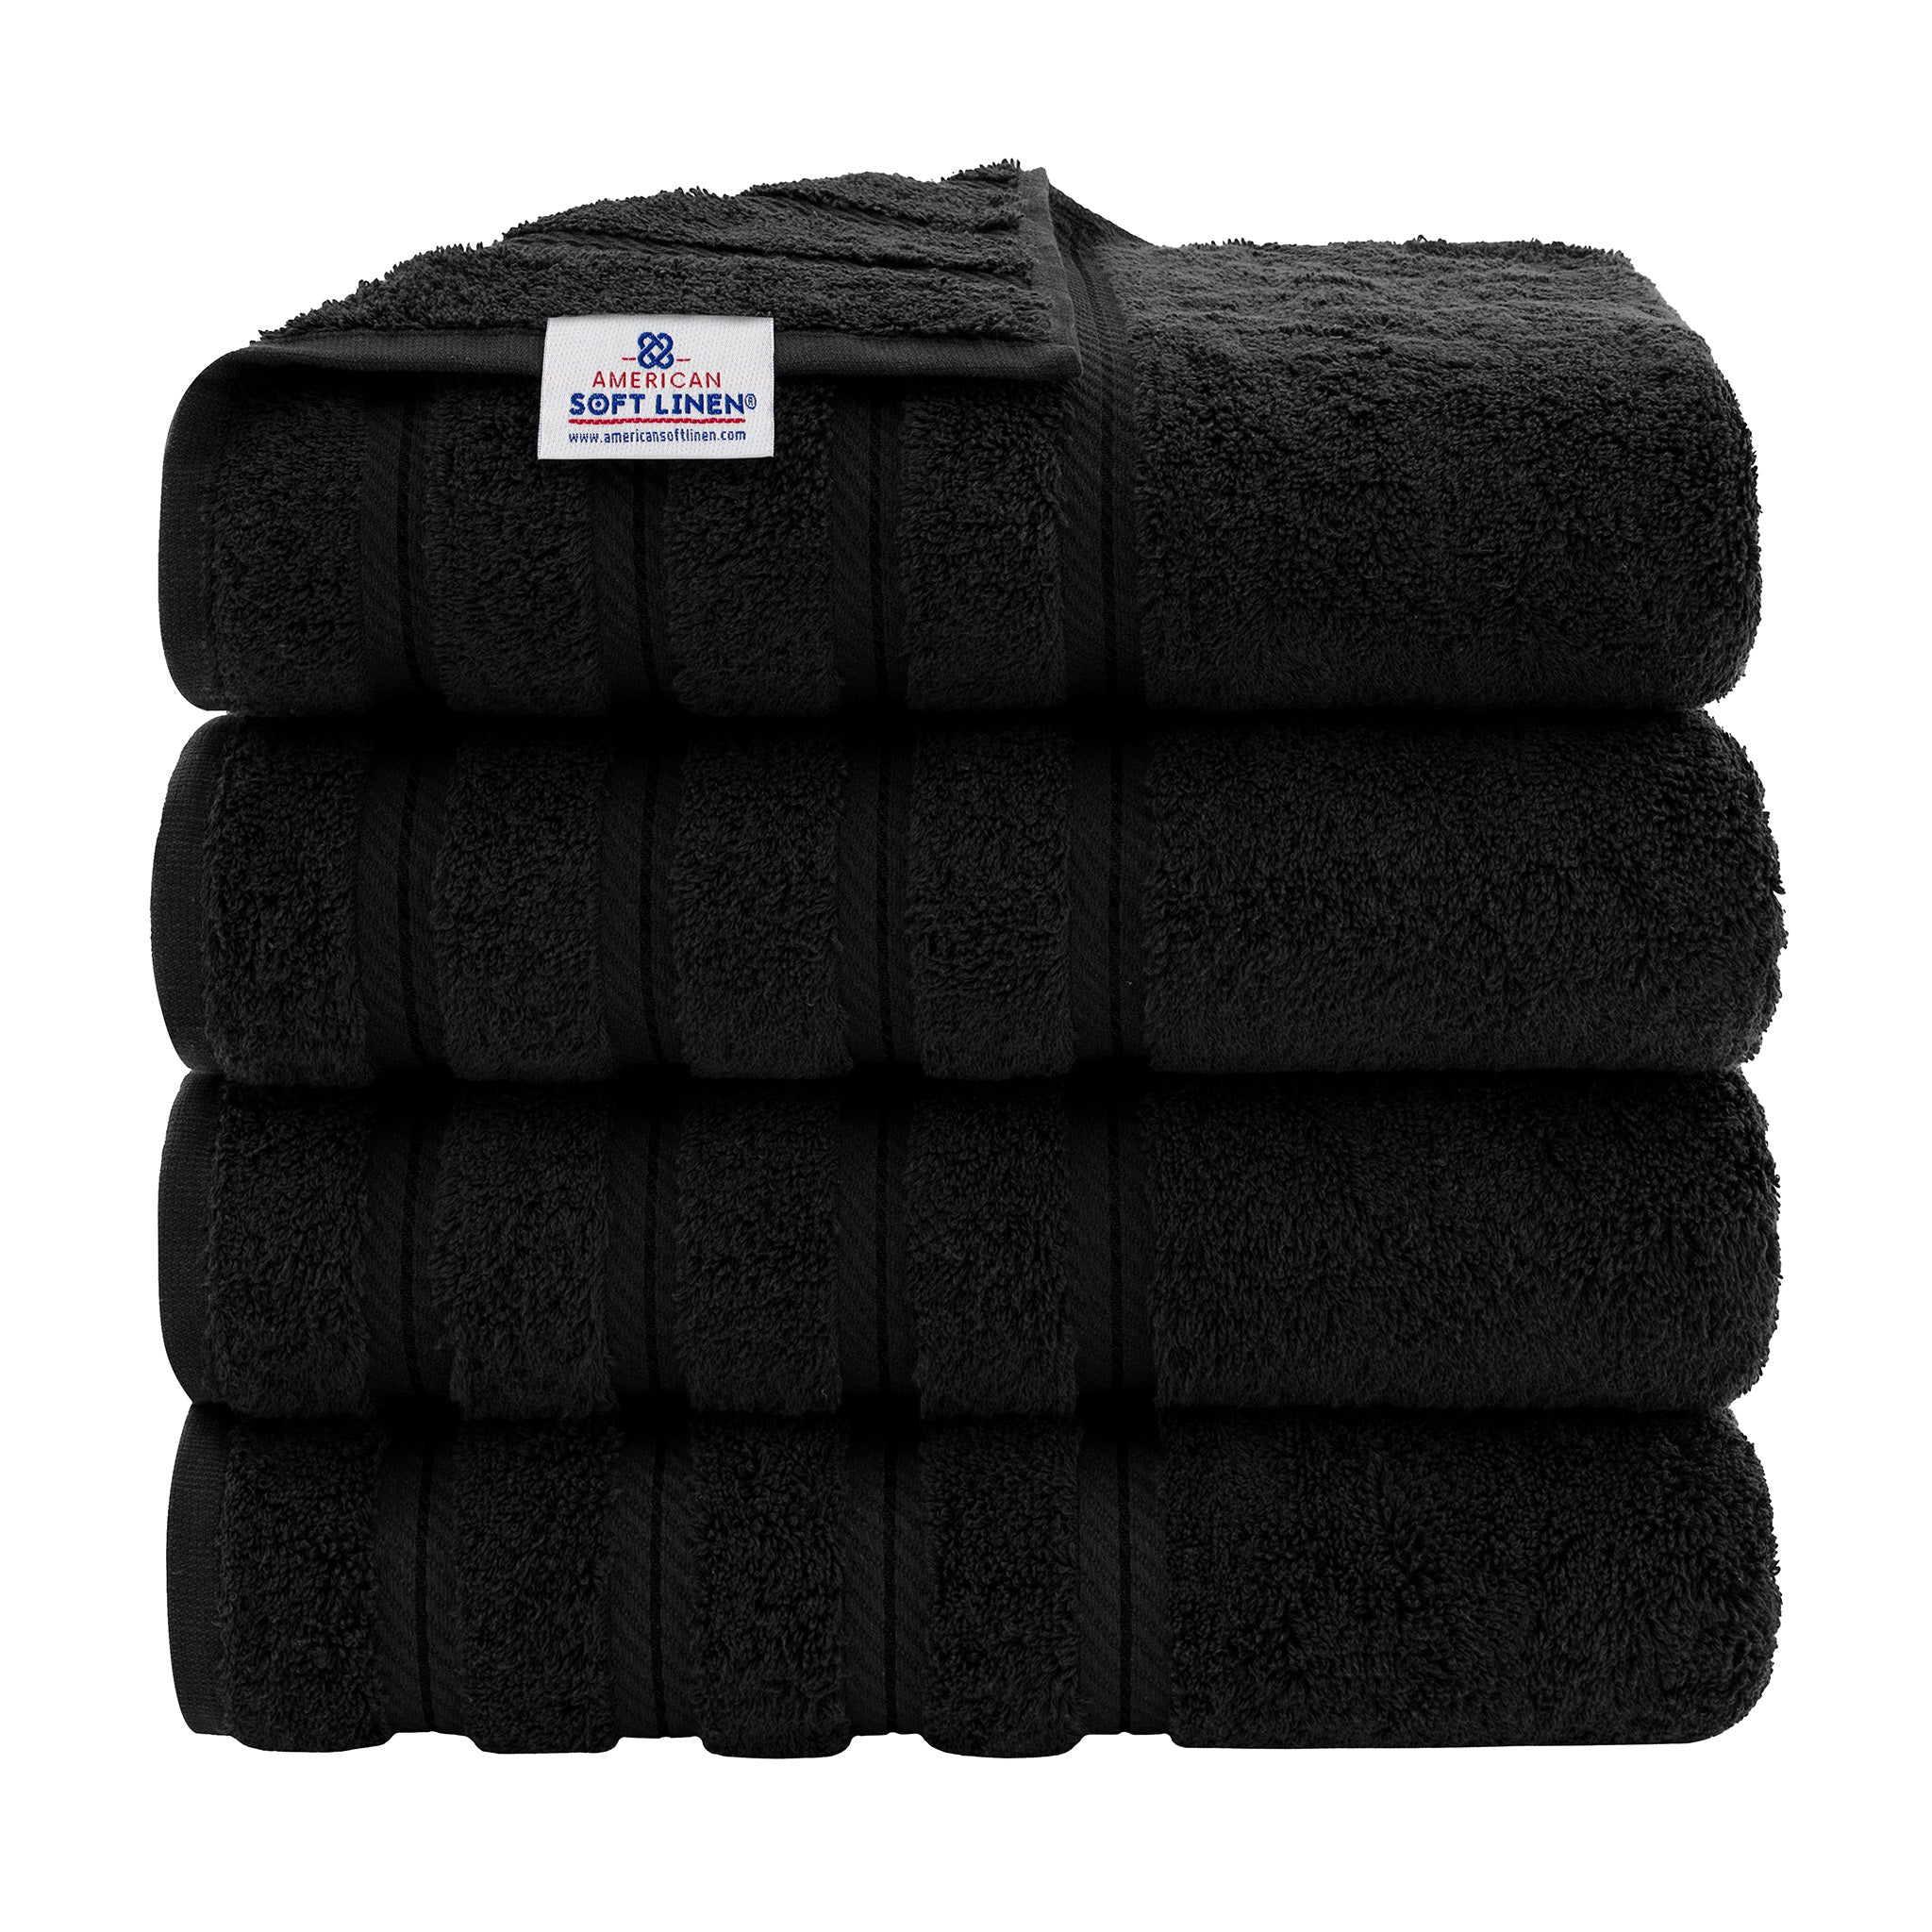 4-Piece Hand Towels Set  100% Turkish Cotton, Spa & Hotel Towels